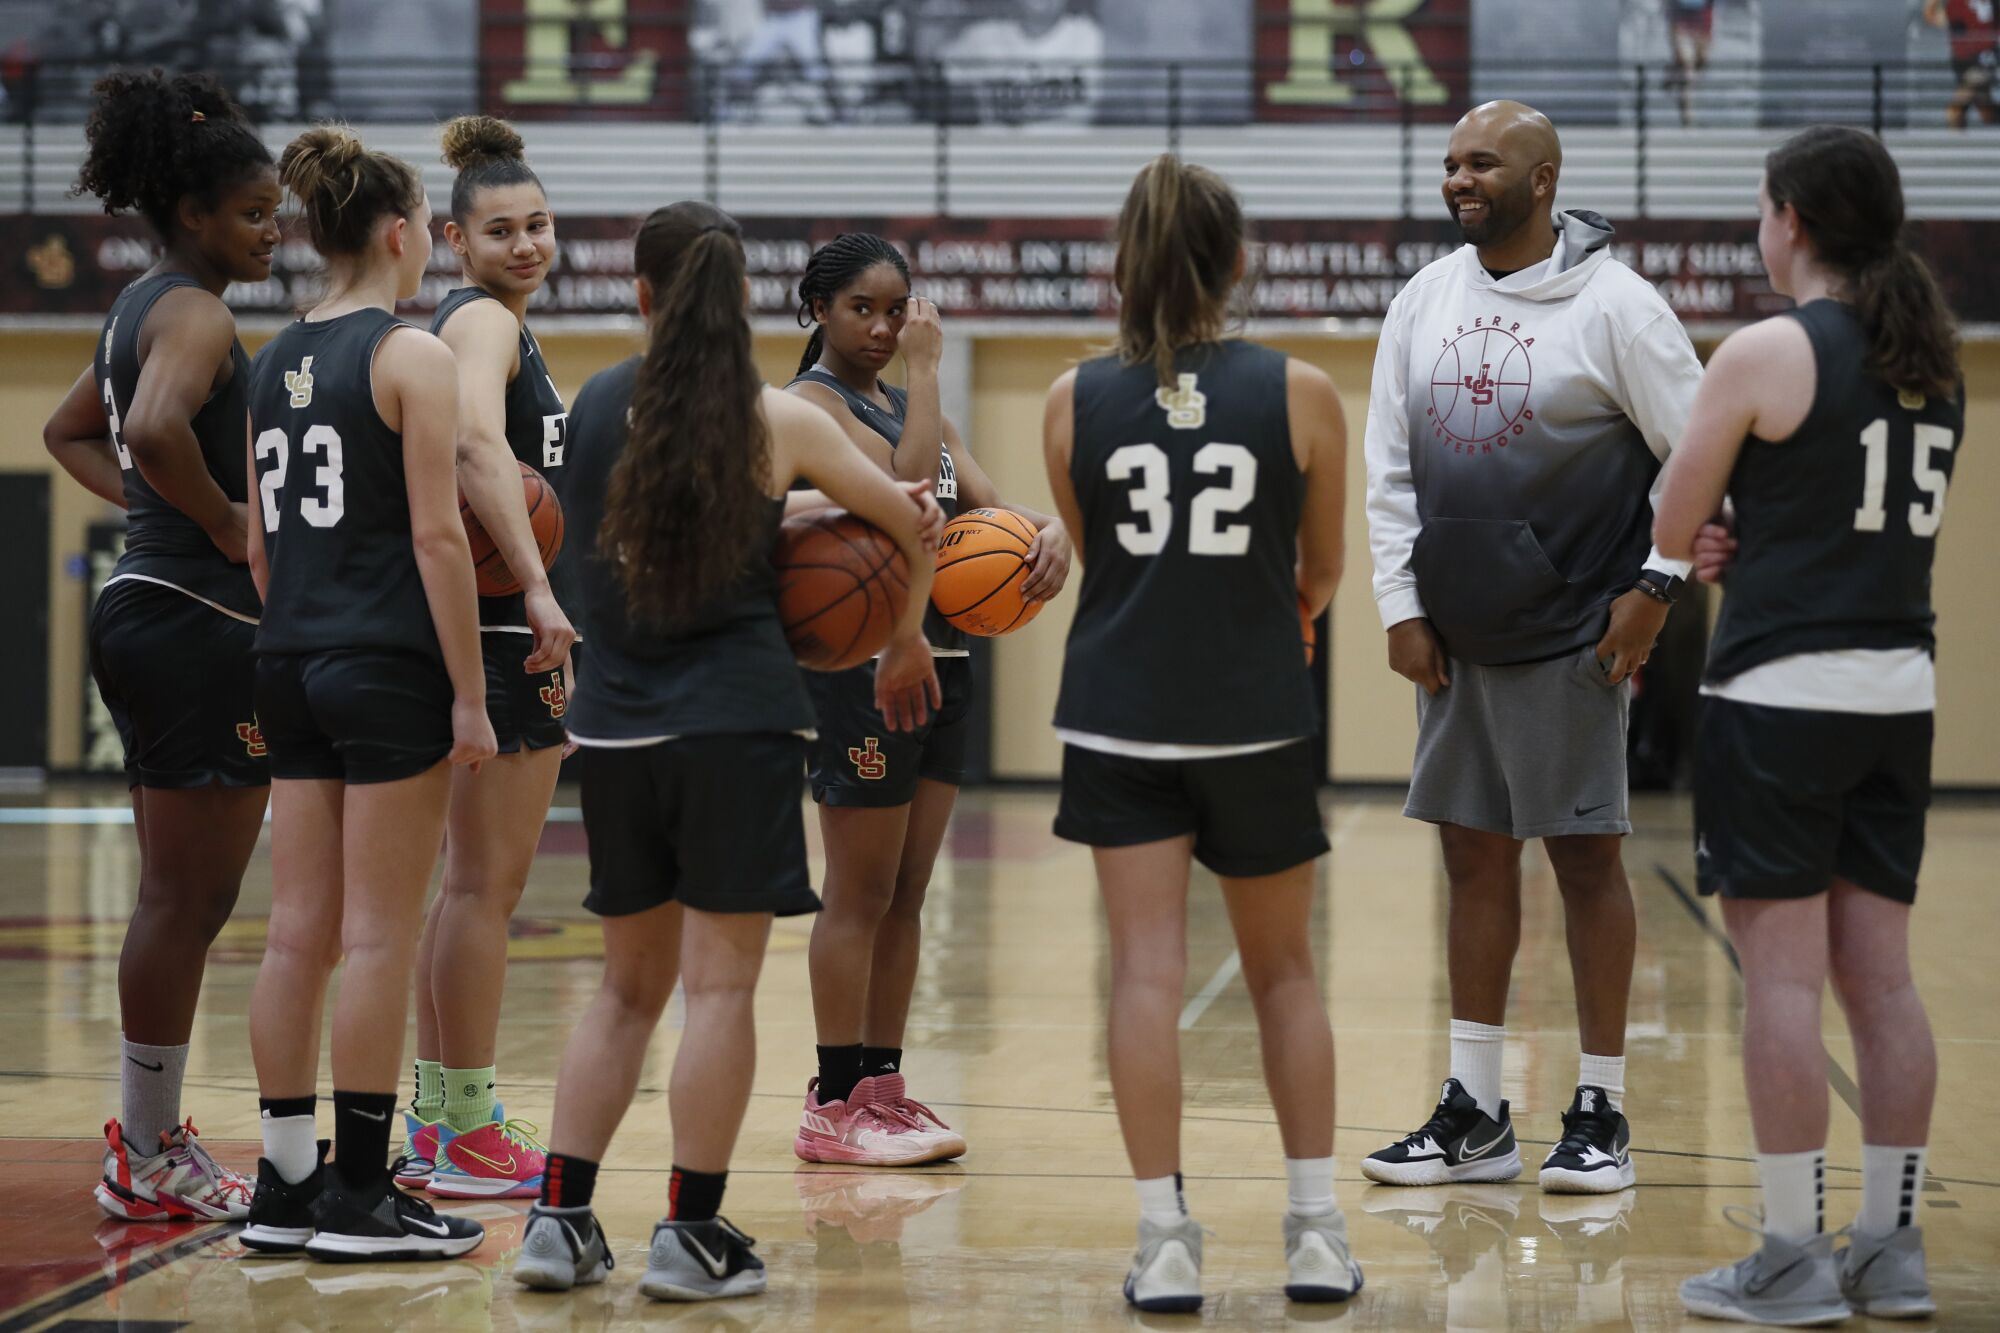 A coach talks to youth basketball team